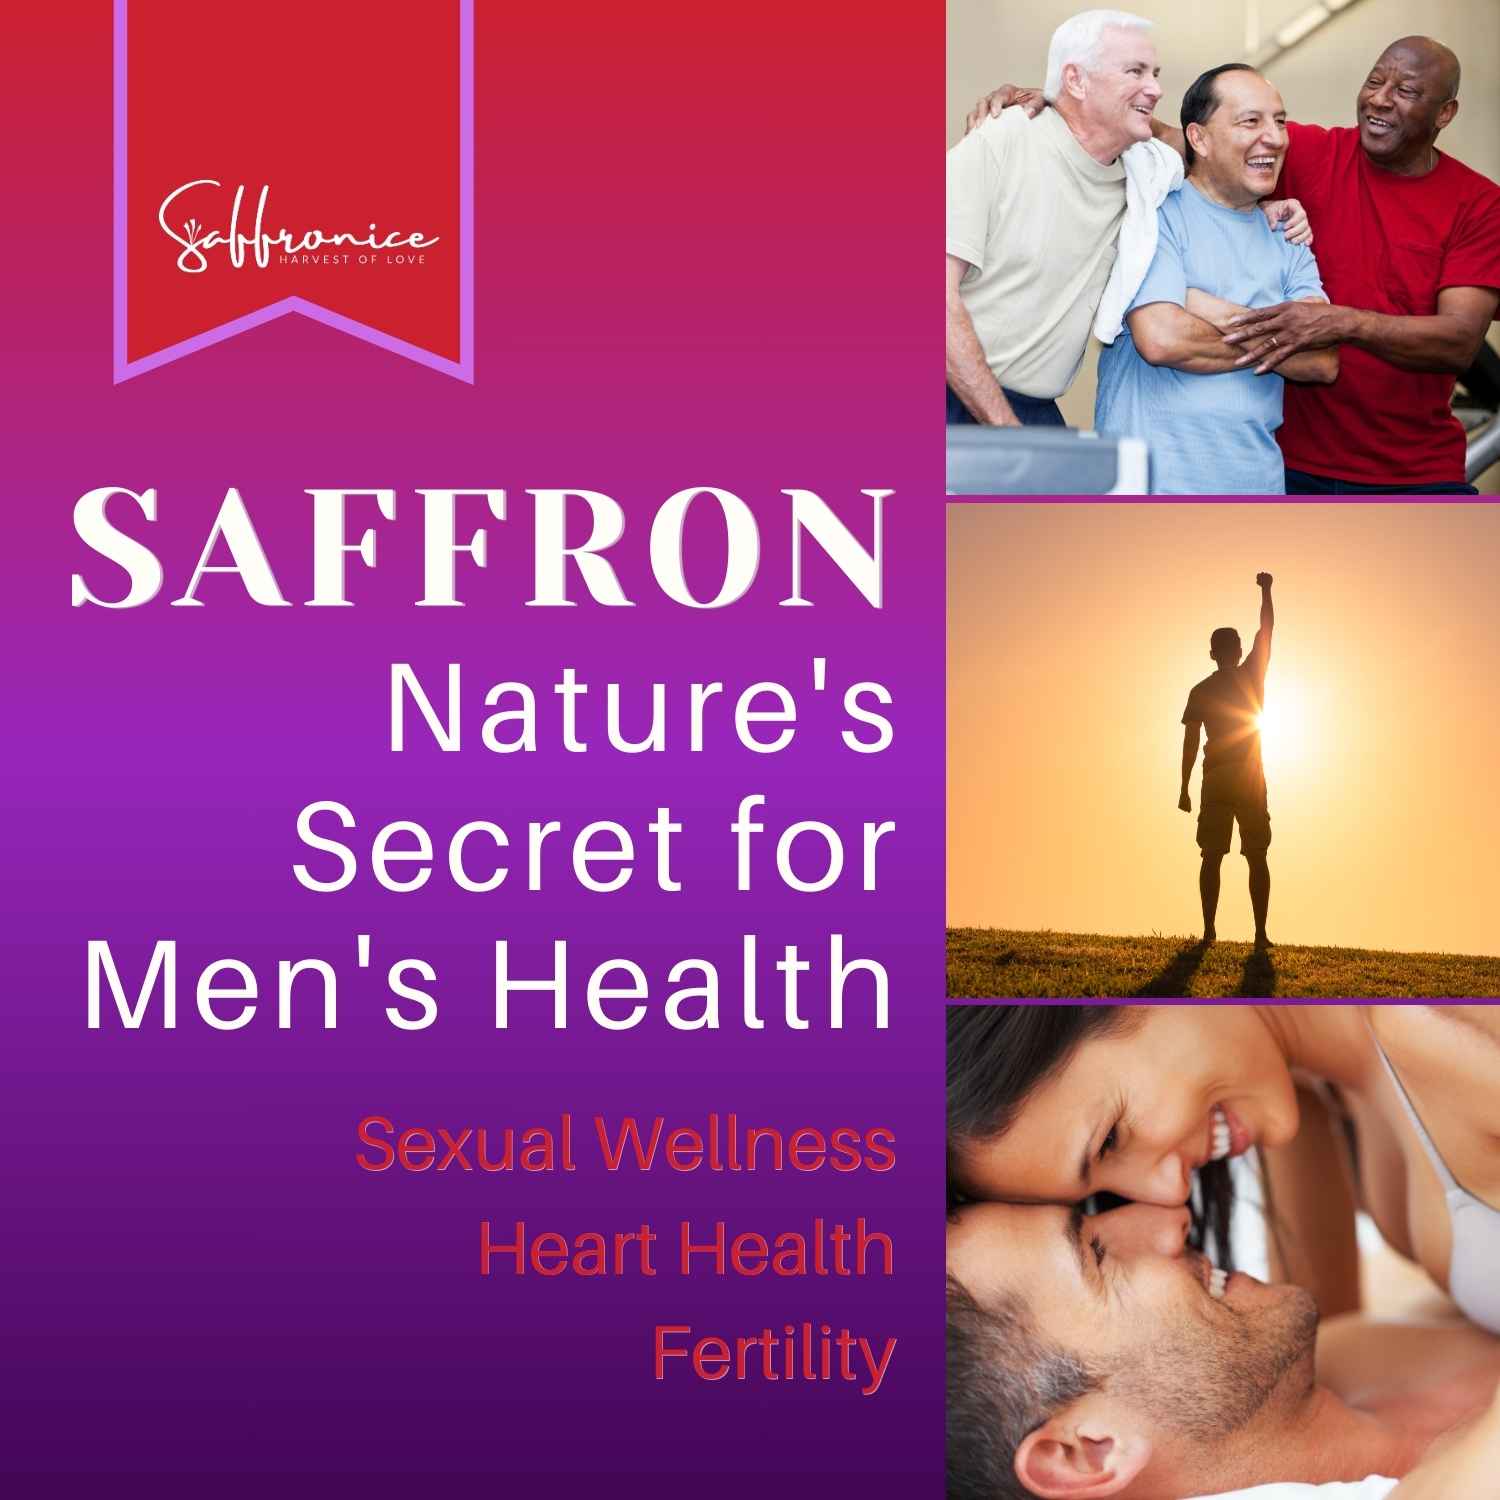 Saffron threads natural health solutions for men